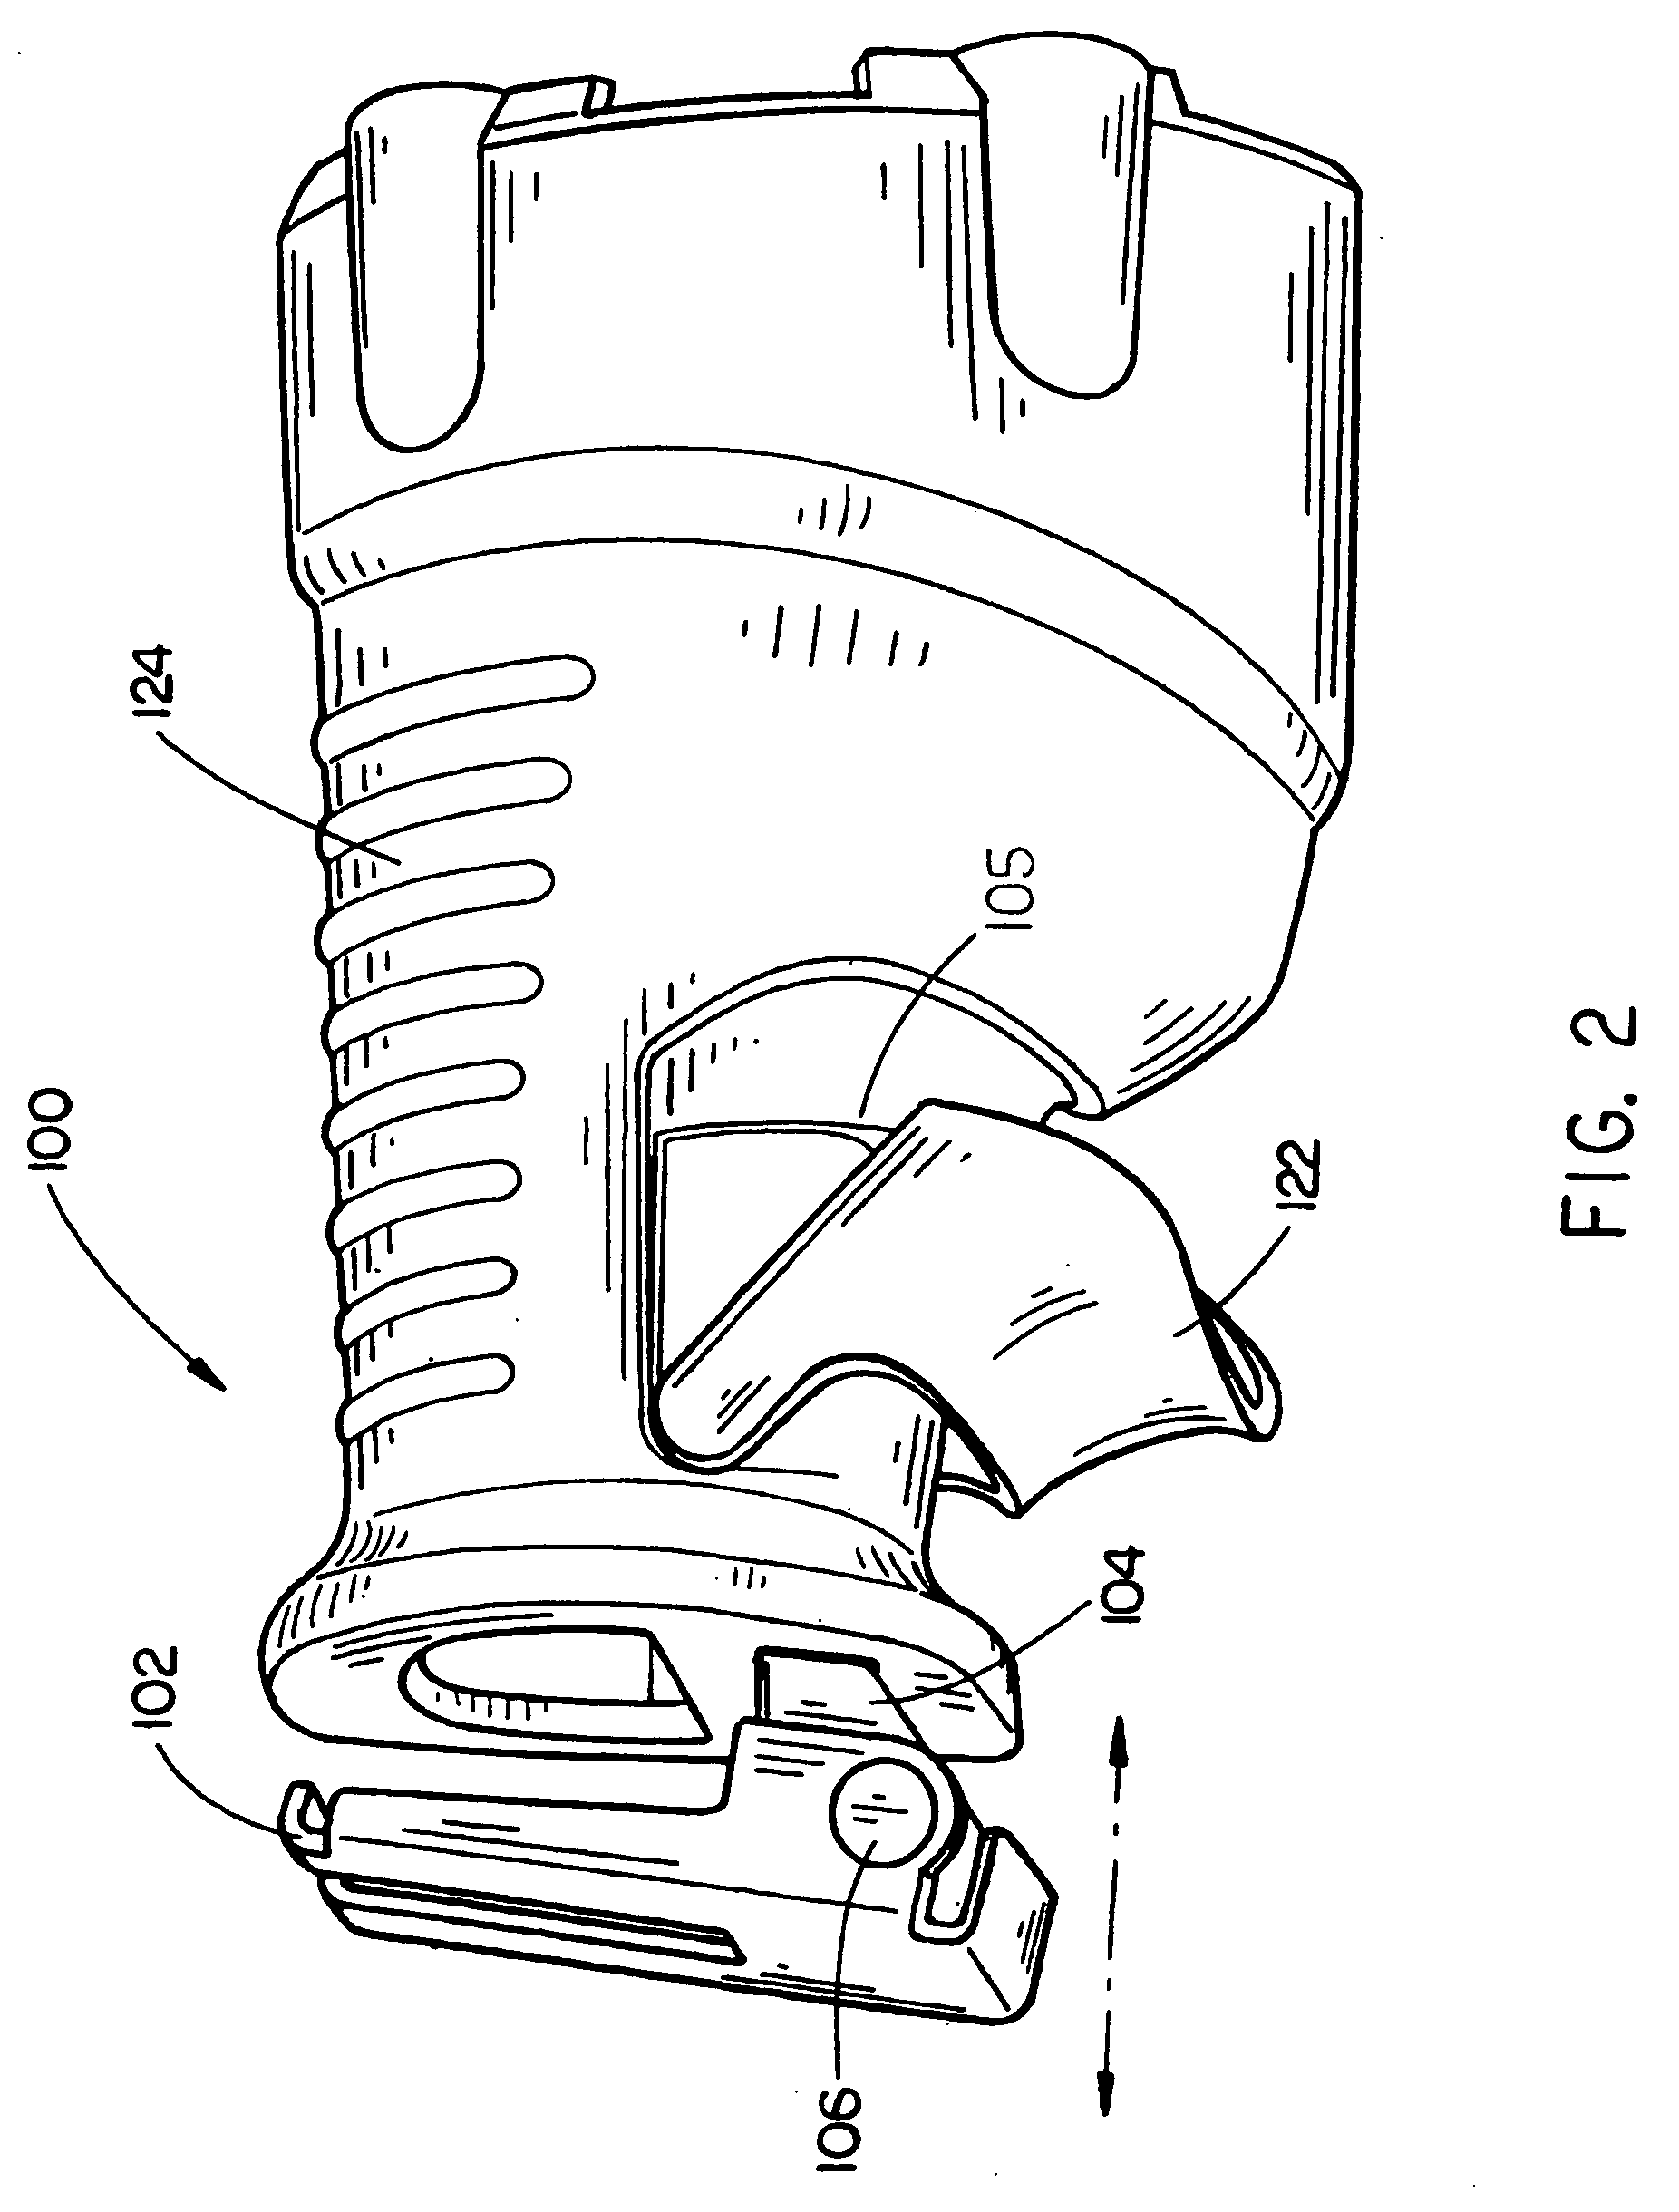 Keyless shoe lock for reciprocating saw